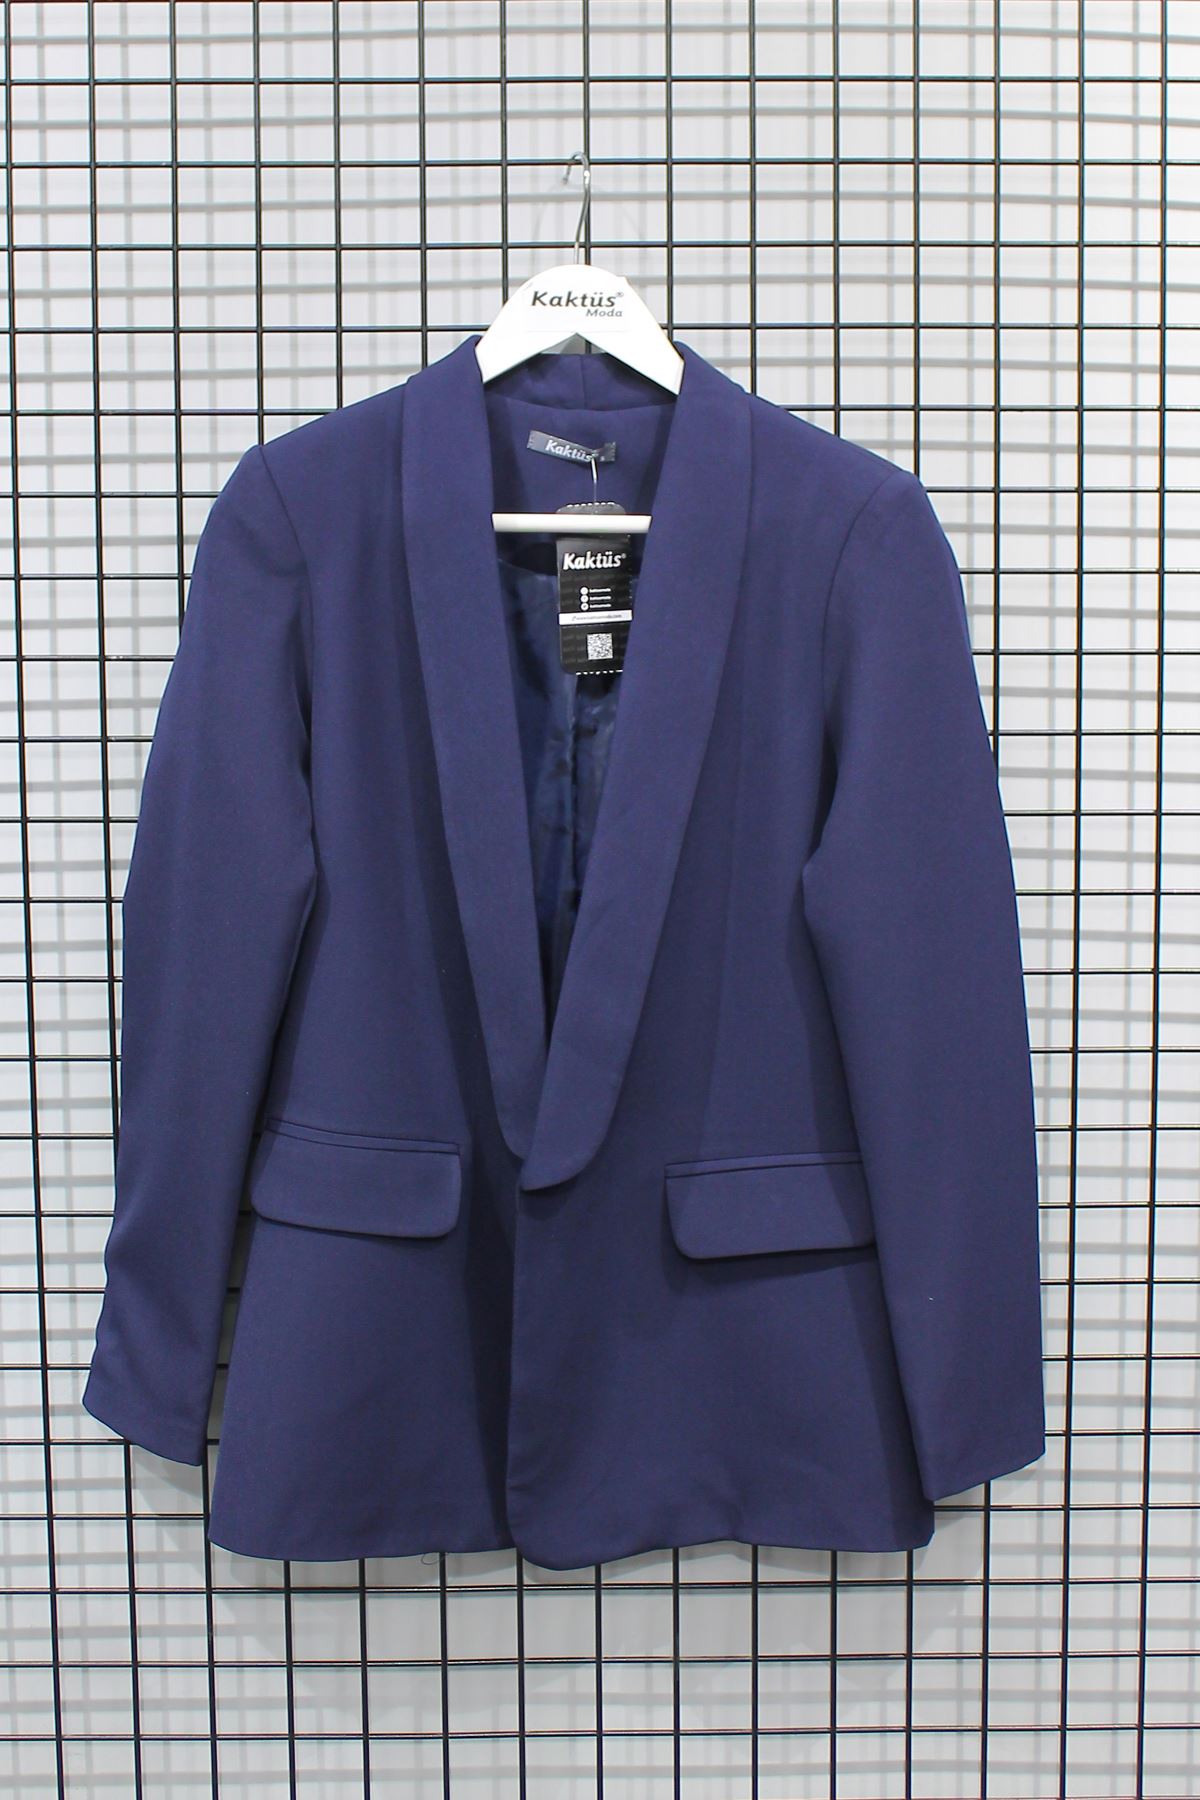 Polyester Fabric Shawl Collar Hip Height Classical Blazer Women Jacket - Navy Blue 